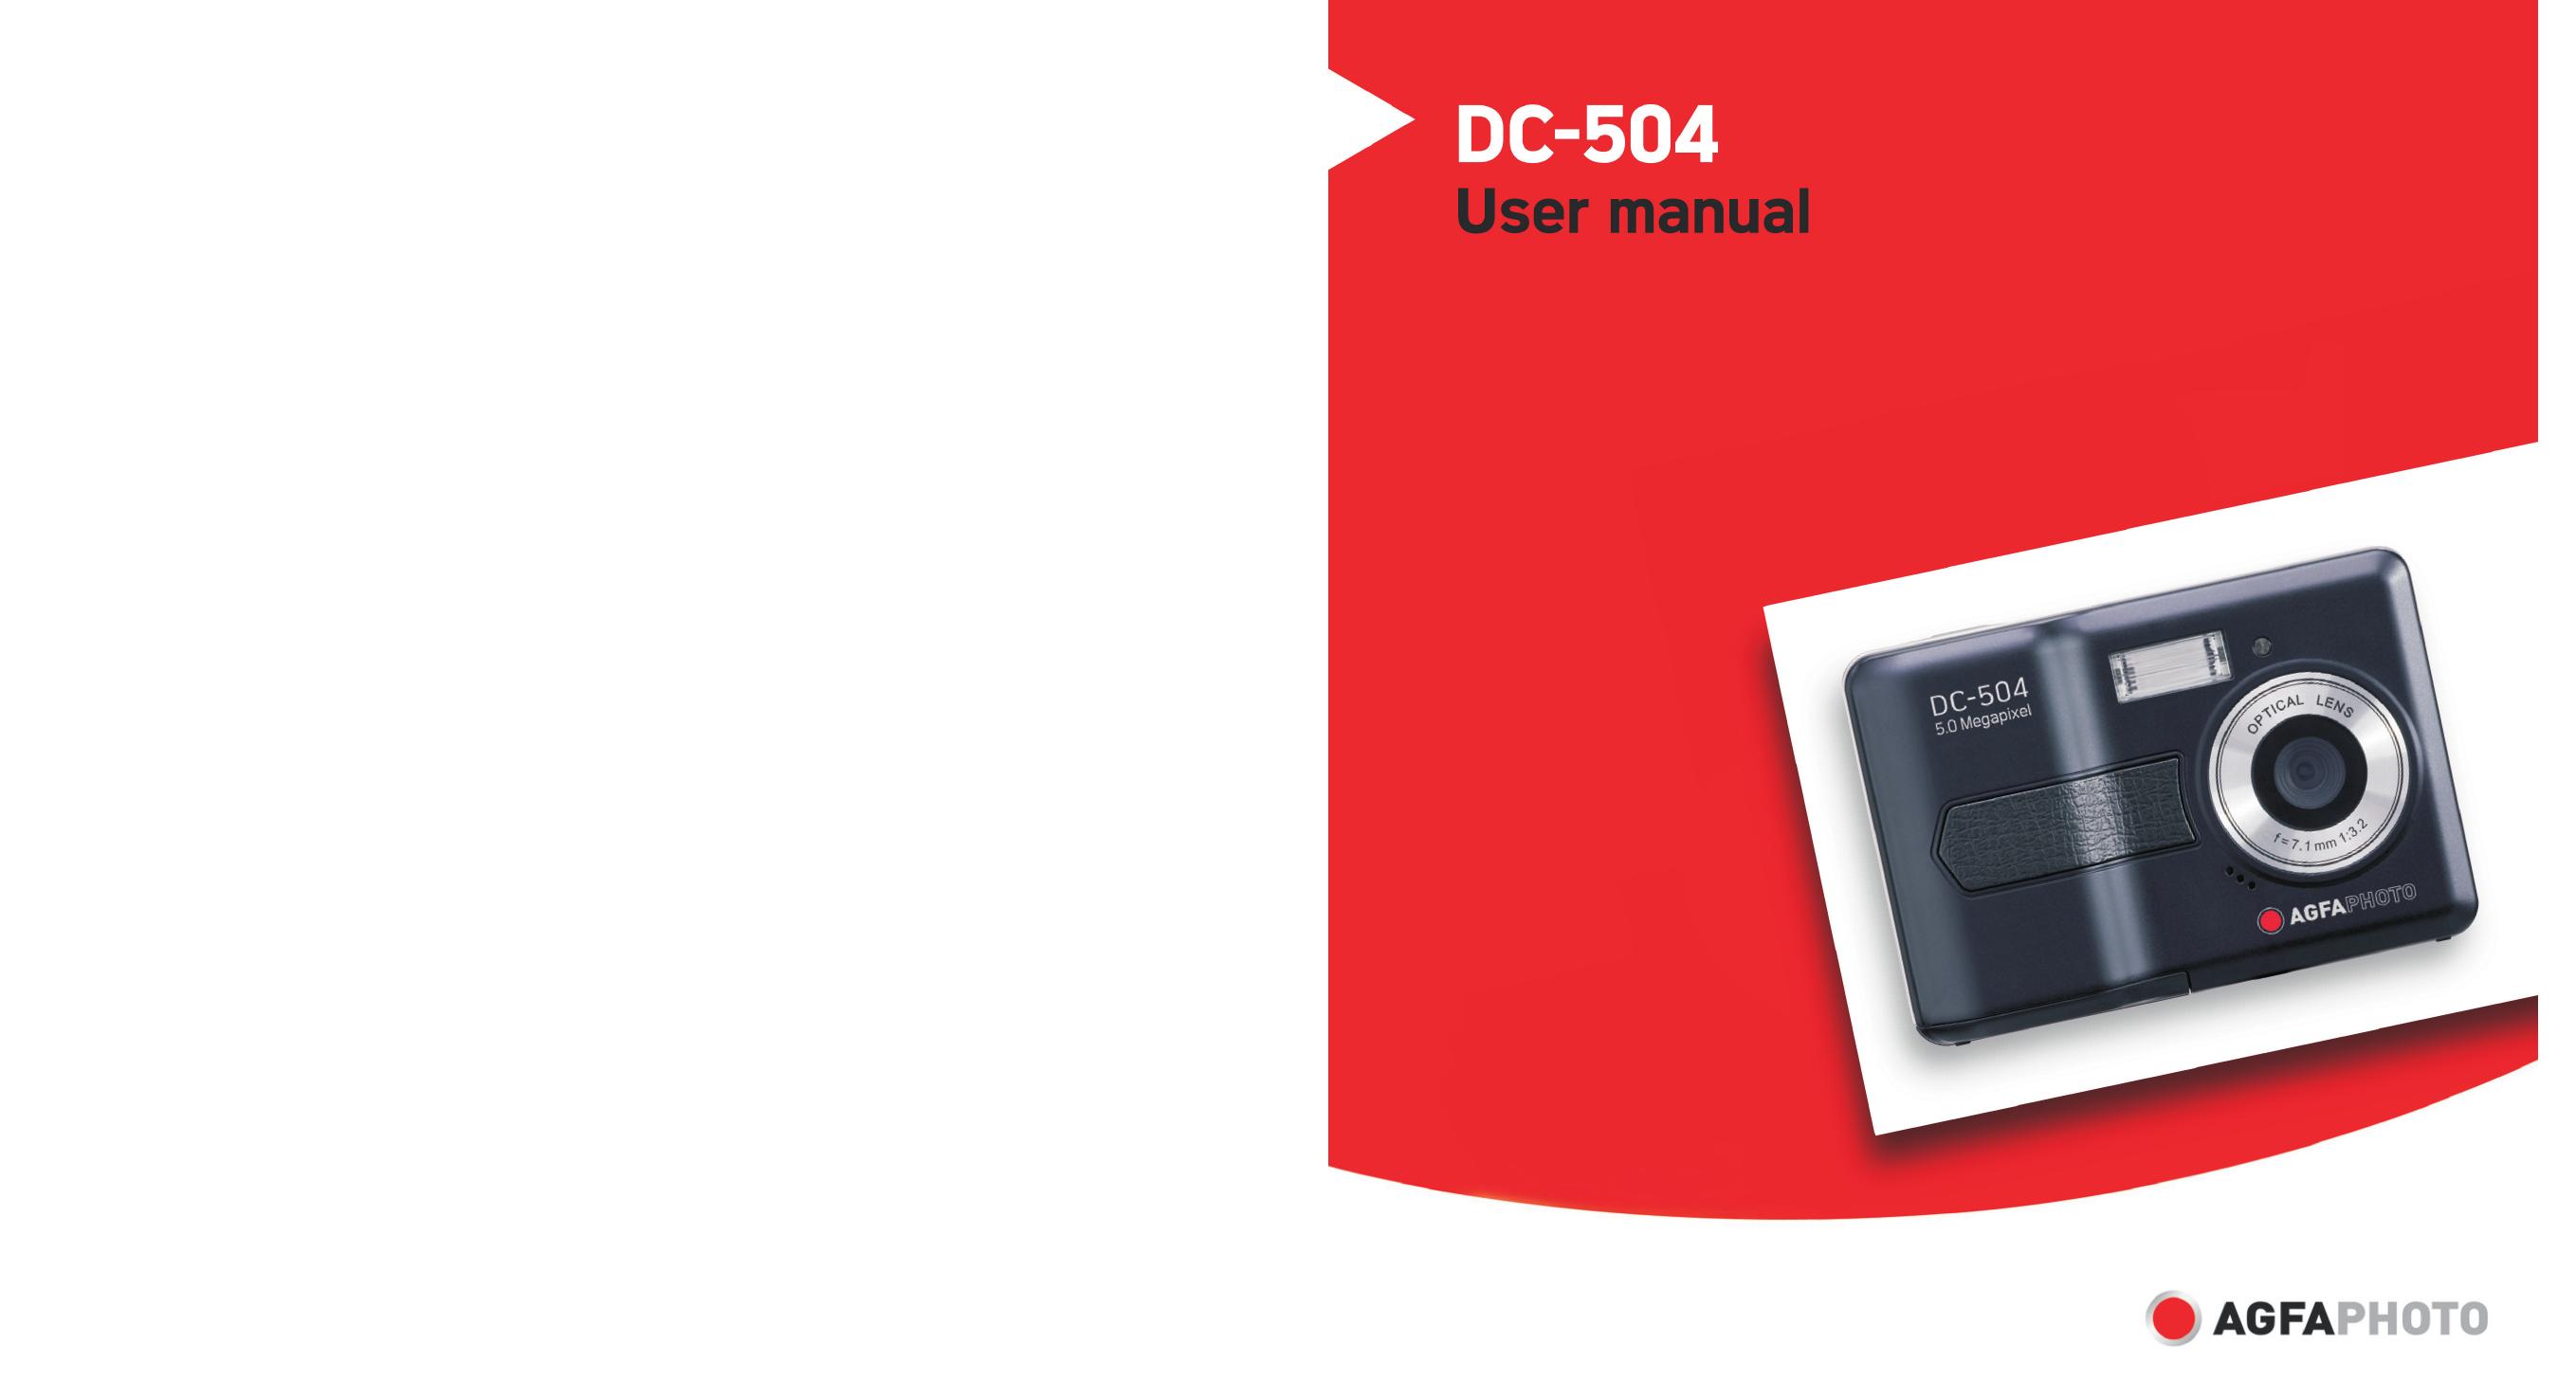 AGFA DC-504 Digital Camera User Manual